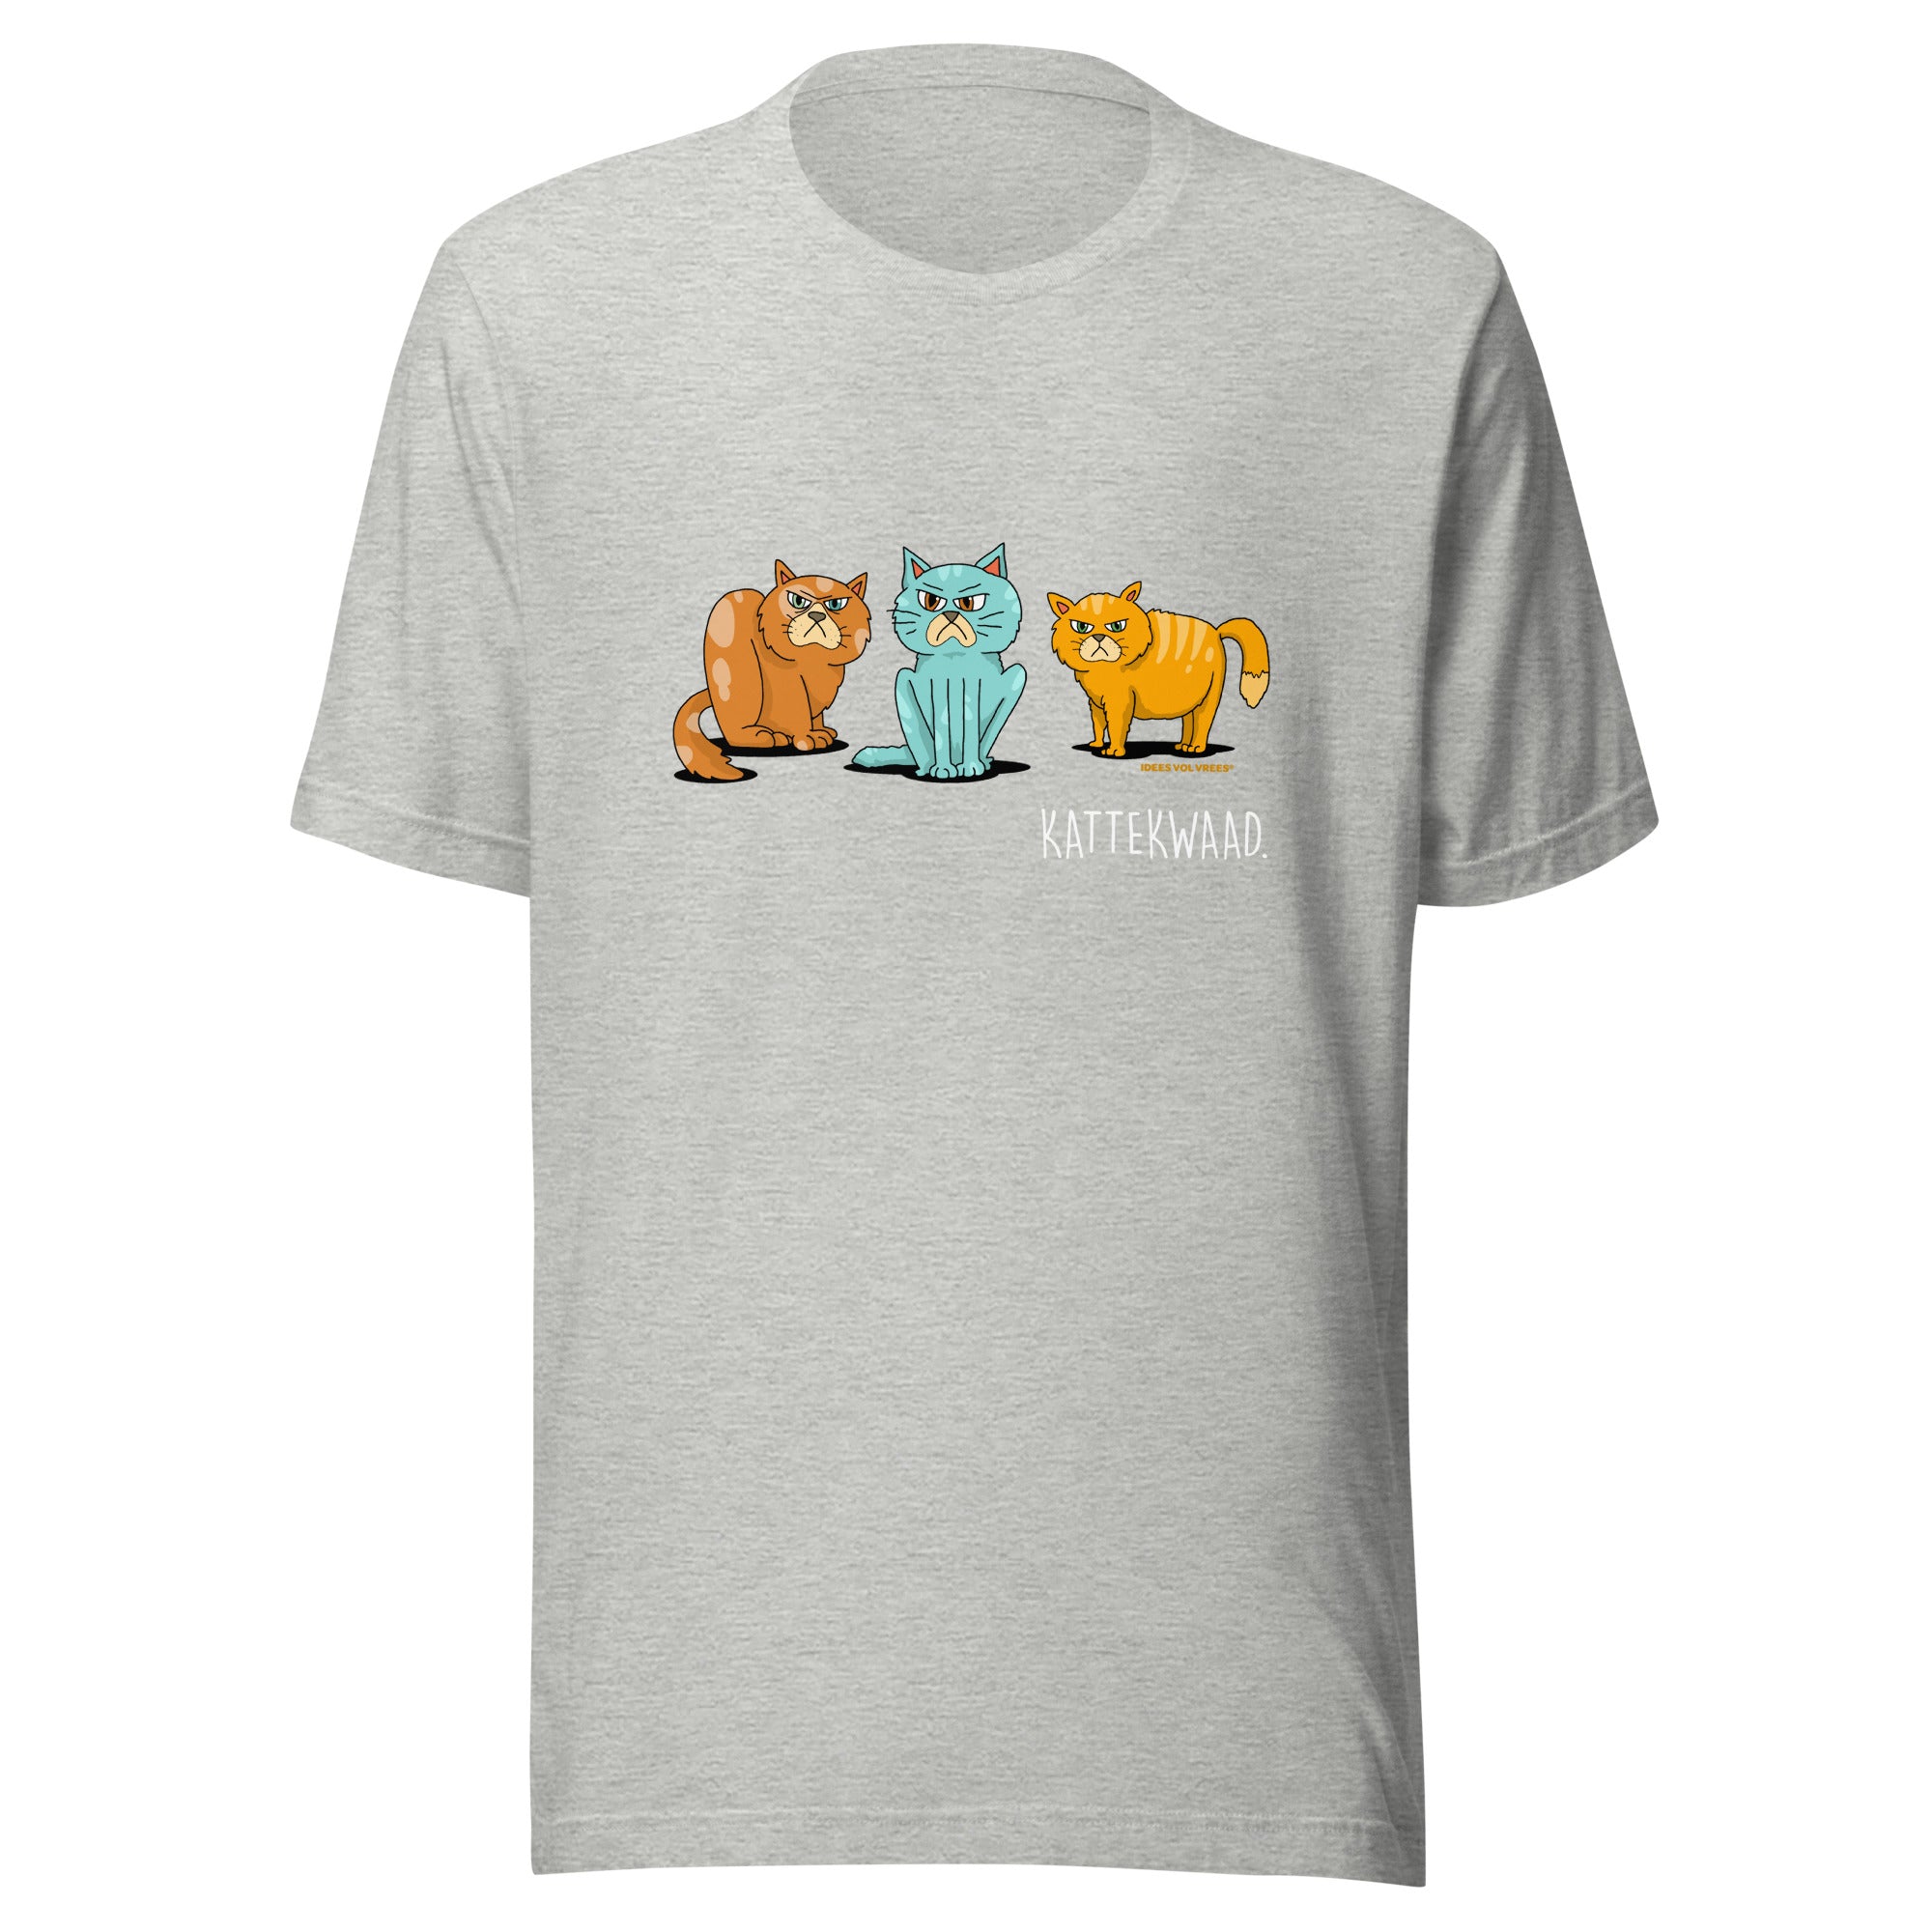 [INTERNASIONAAL] Idees Vol Vrees® Kattekwaad Men's T-shirt